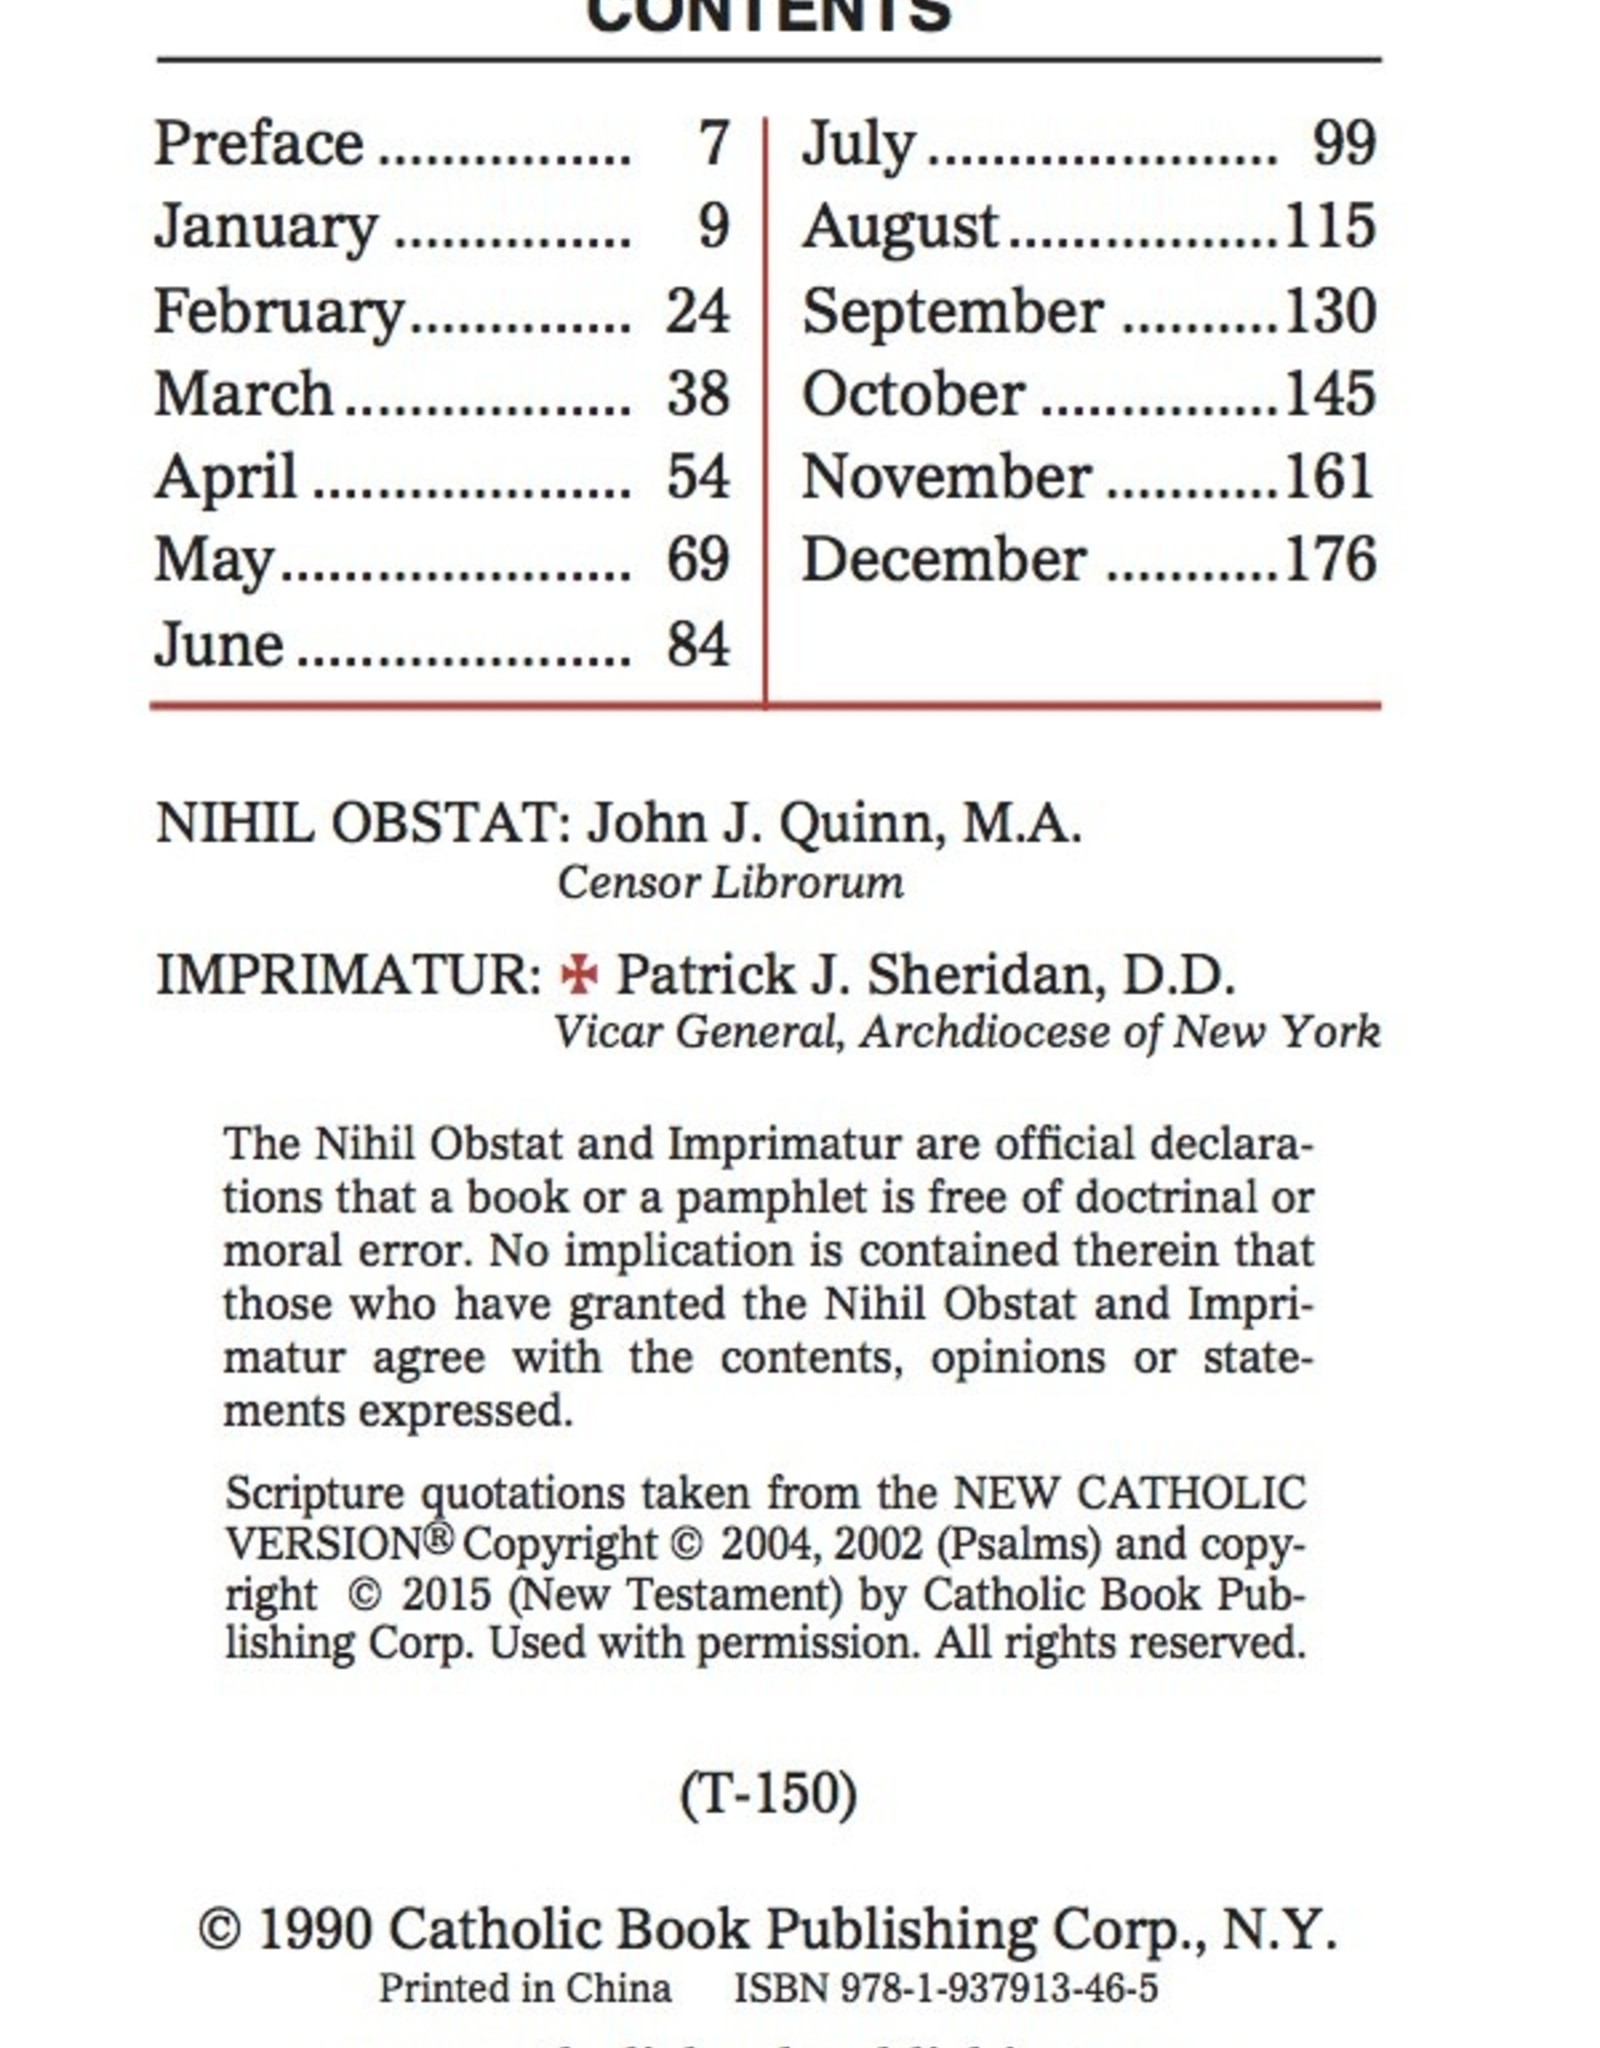 Catholic Book Publishing Bible Day By Day, by Rev. John Kersten